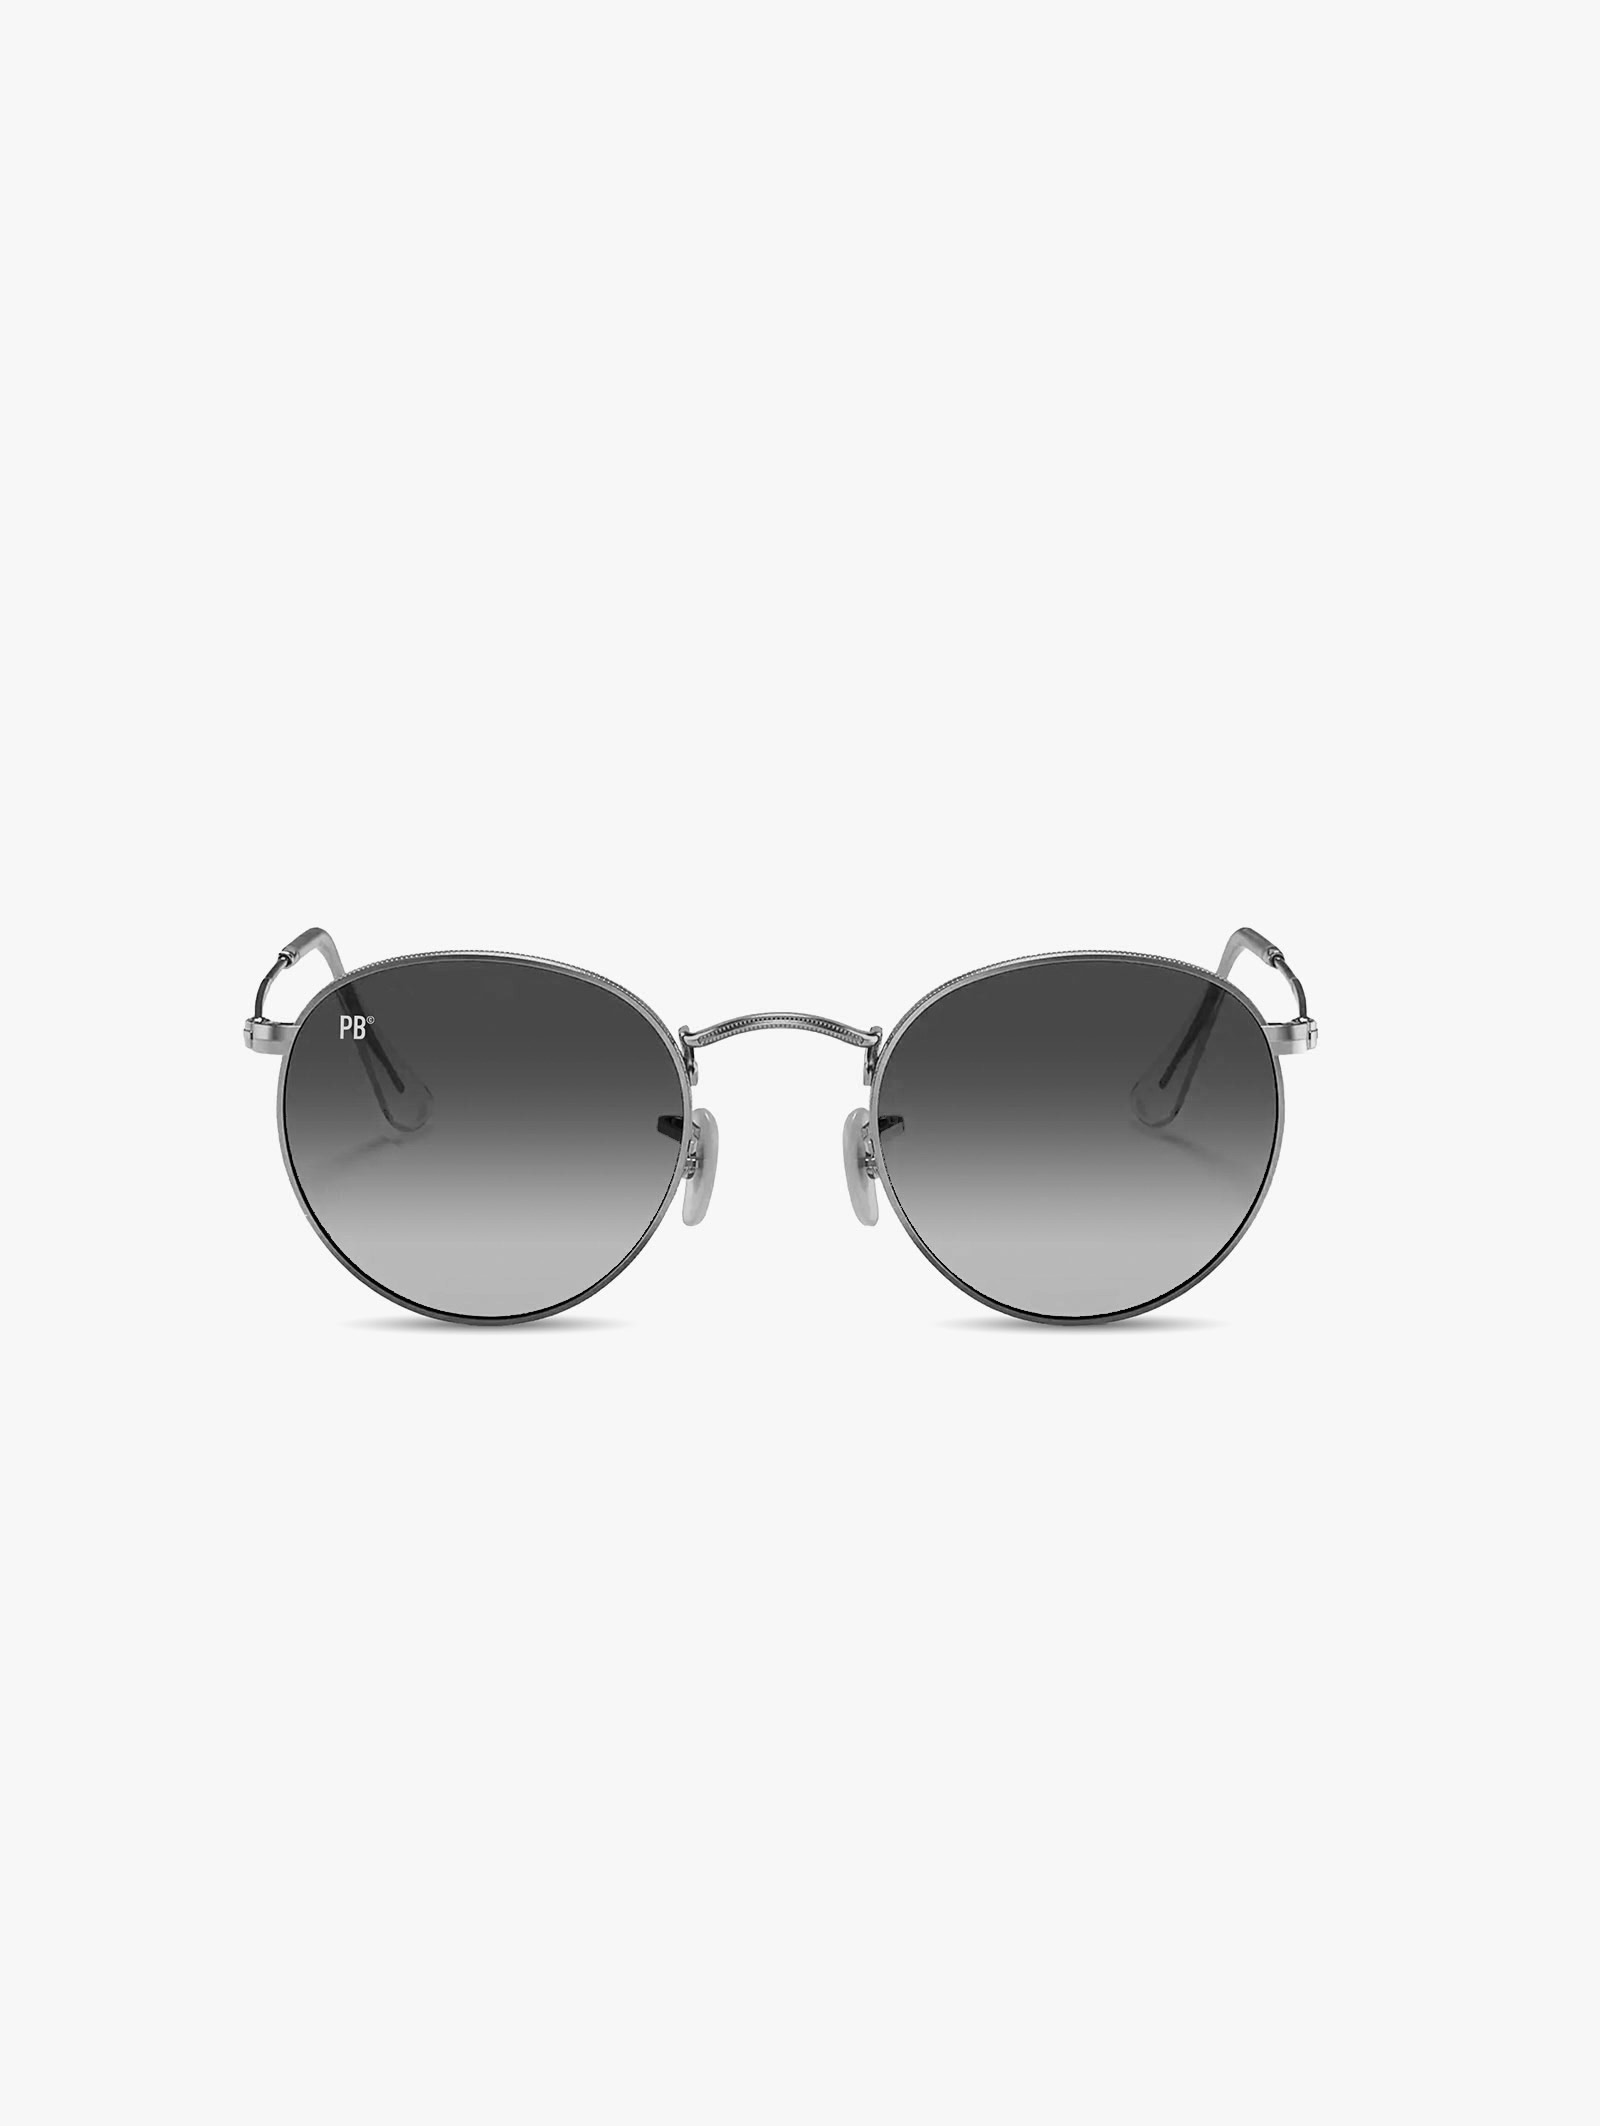 Runde Silber-Grau-PB-Sonnenbrille